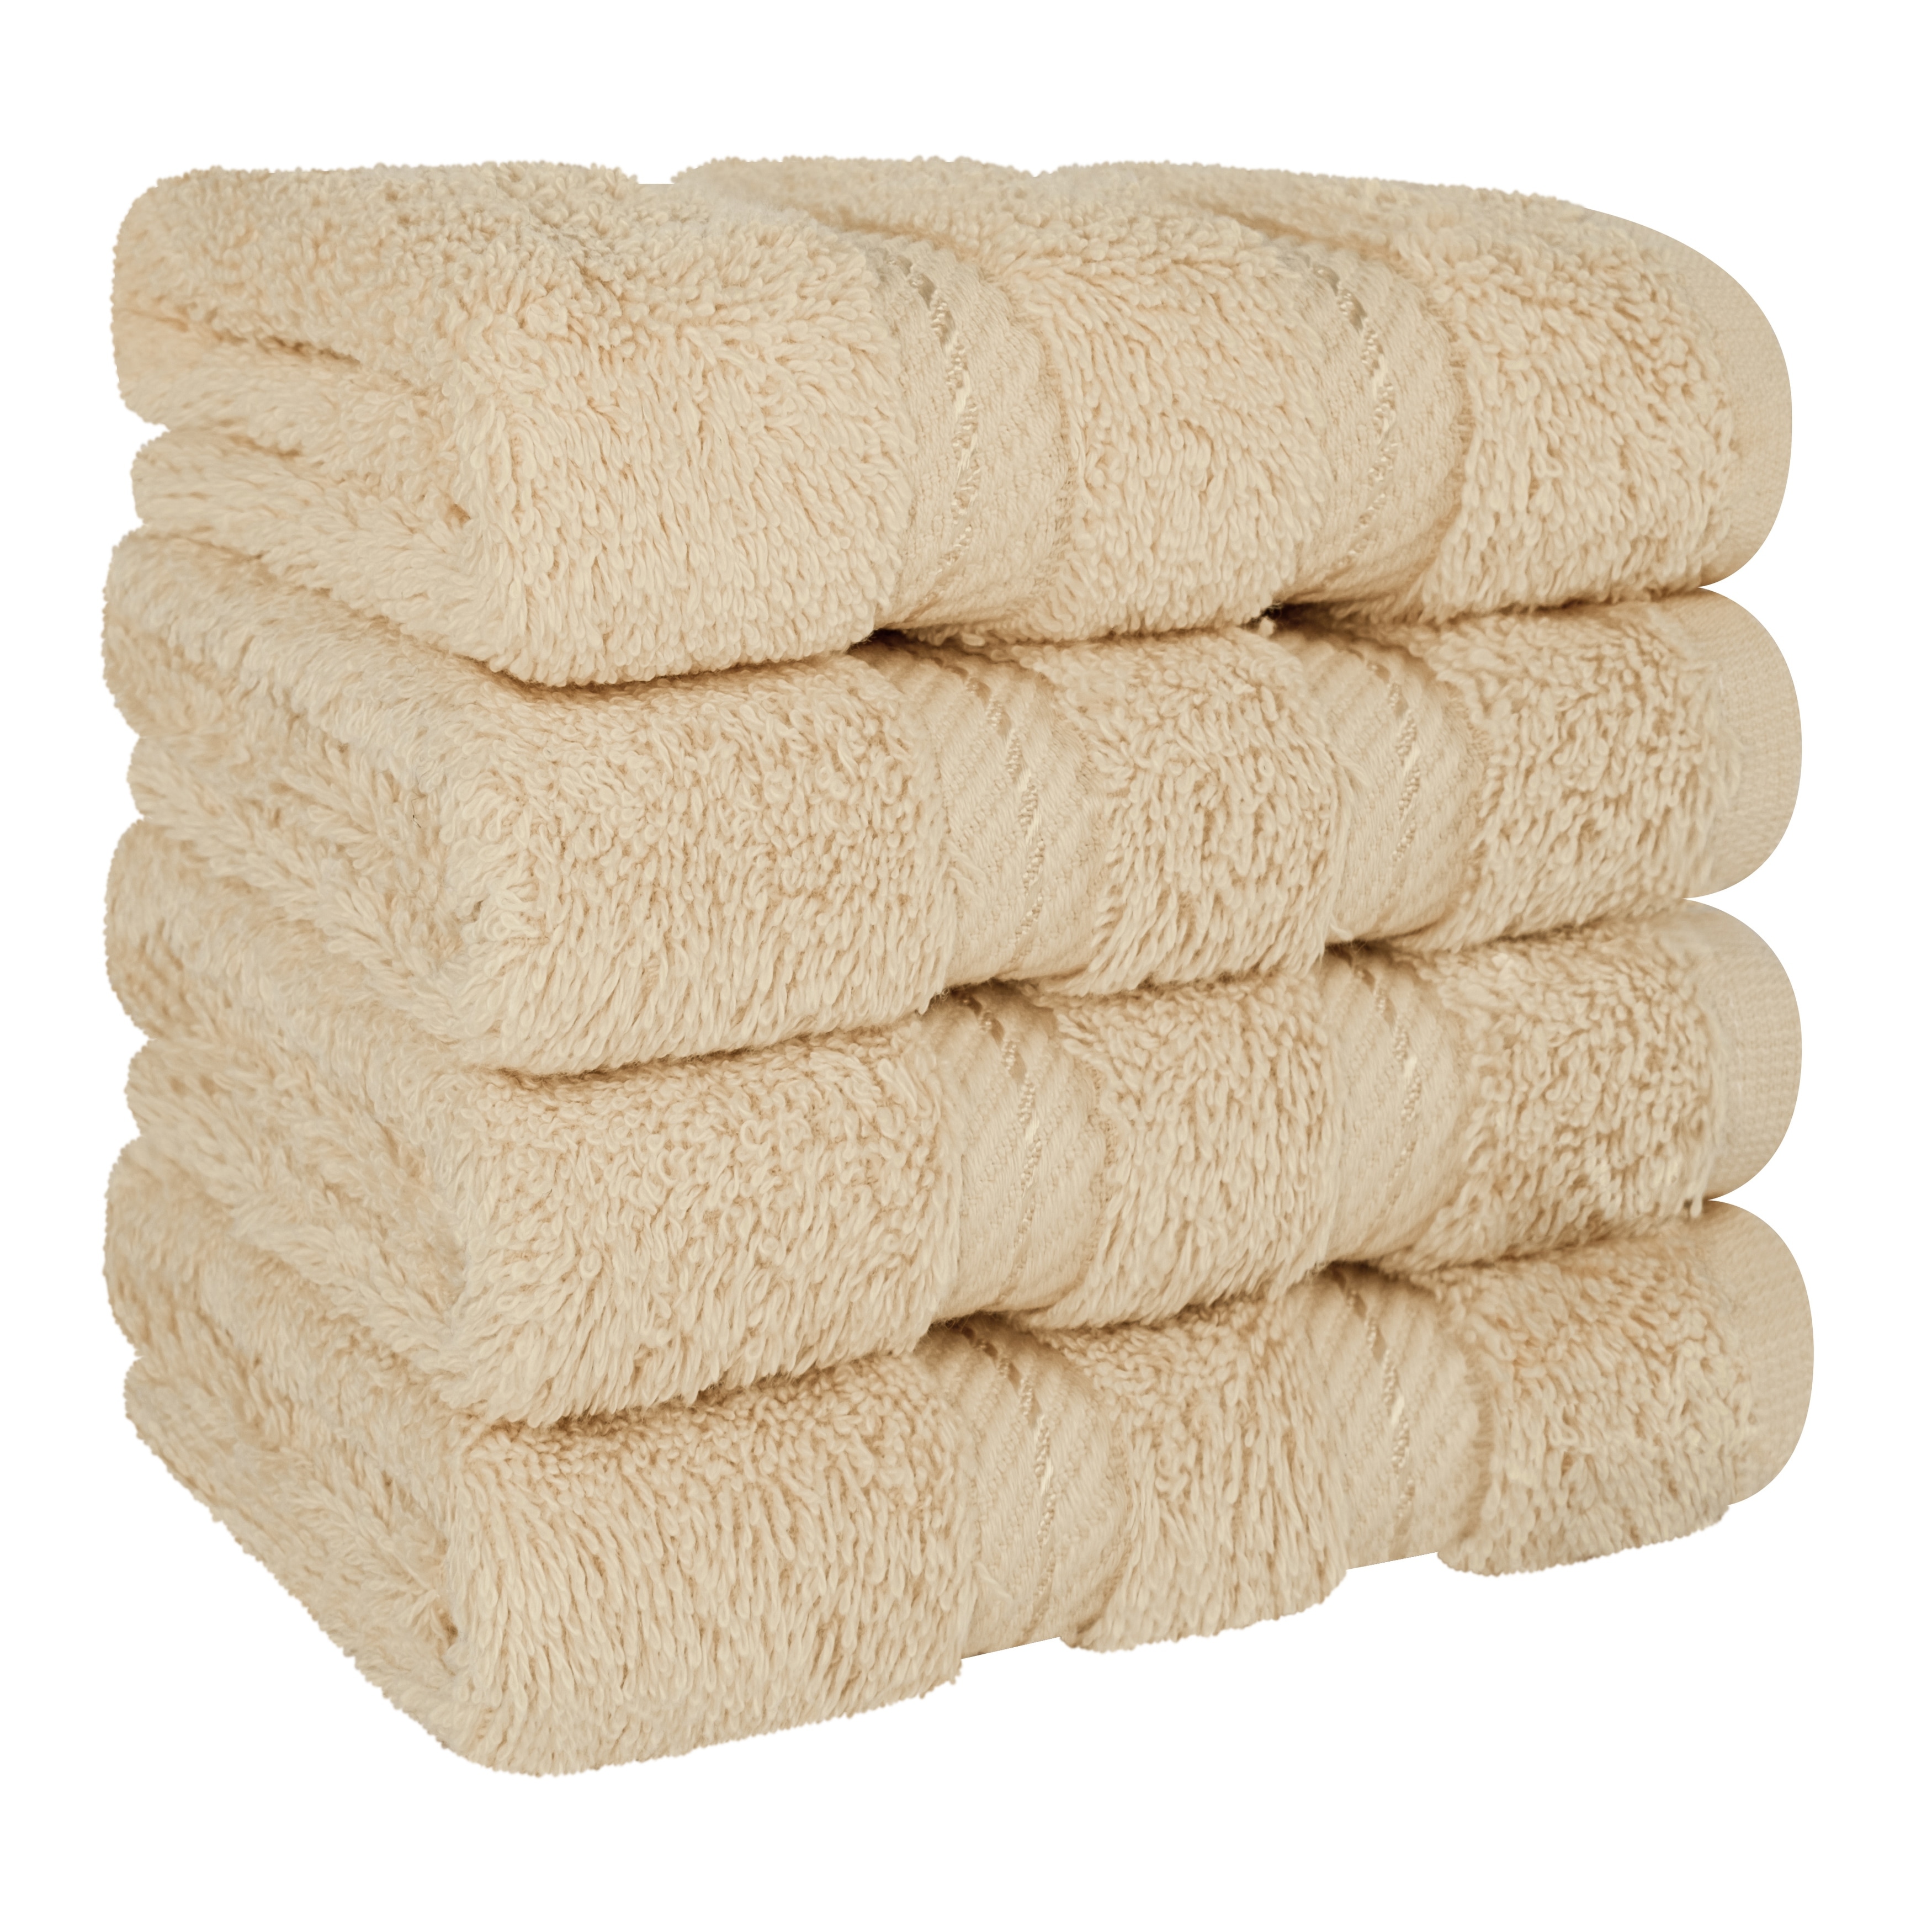 https://ak1.ostkcdn.com/images/products/is/images/direct/ede9c9b7db8d0c8c2136864ddd4c3346d3a3418f/American-Soft-Linen-Premium-Genuine-Turkish-Cotton-4-Piece-Washcloth-Set.jpg